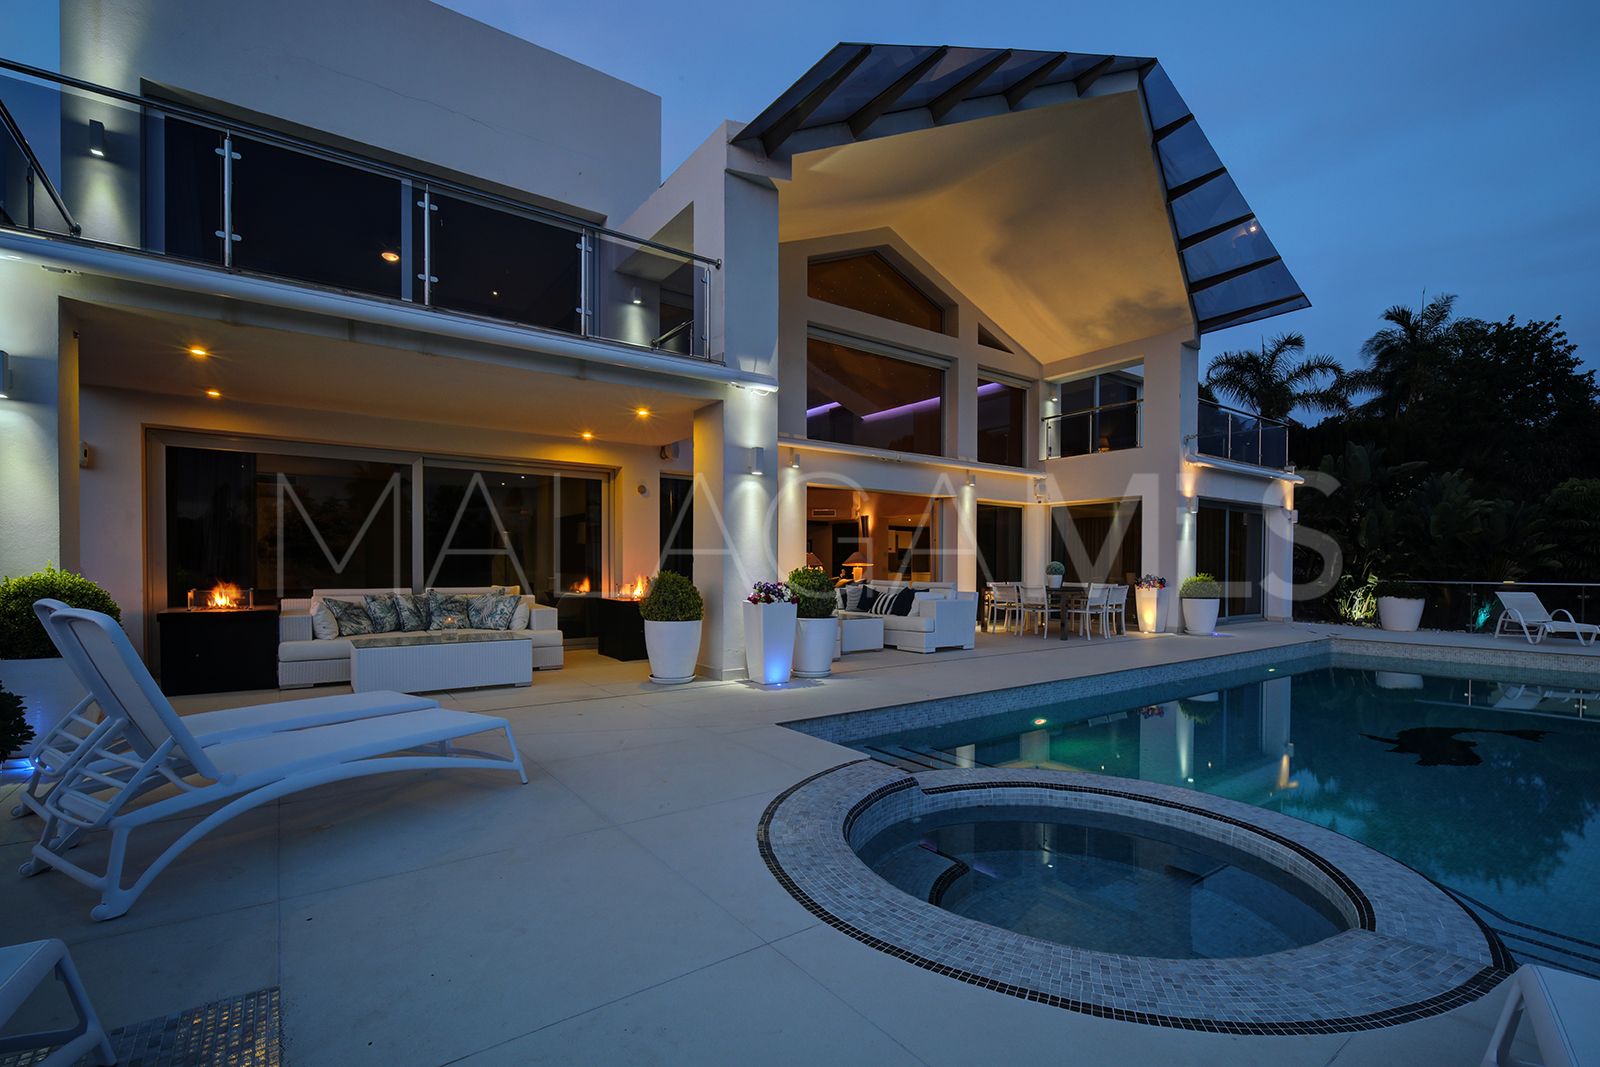 Villa with 5 bedrooms for sale in Los Naranjos Country Club